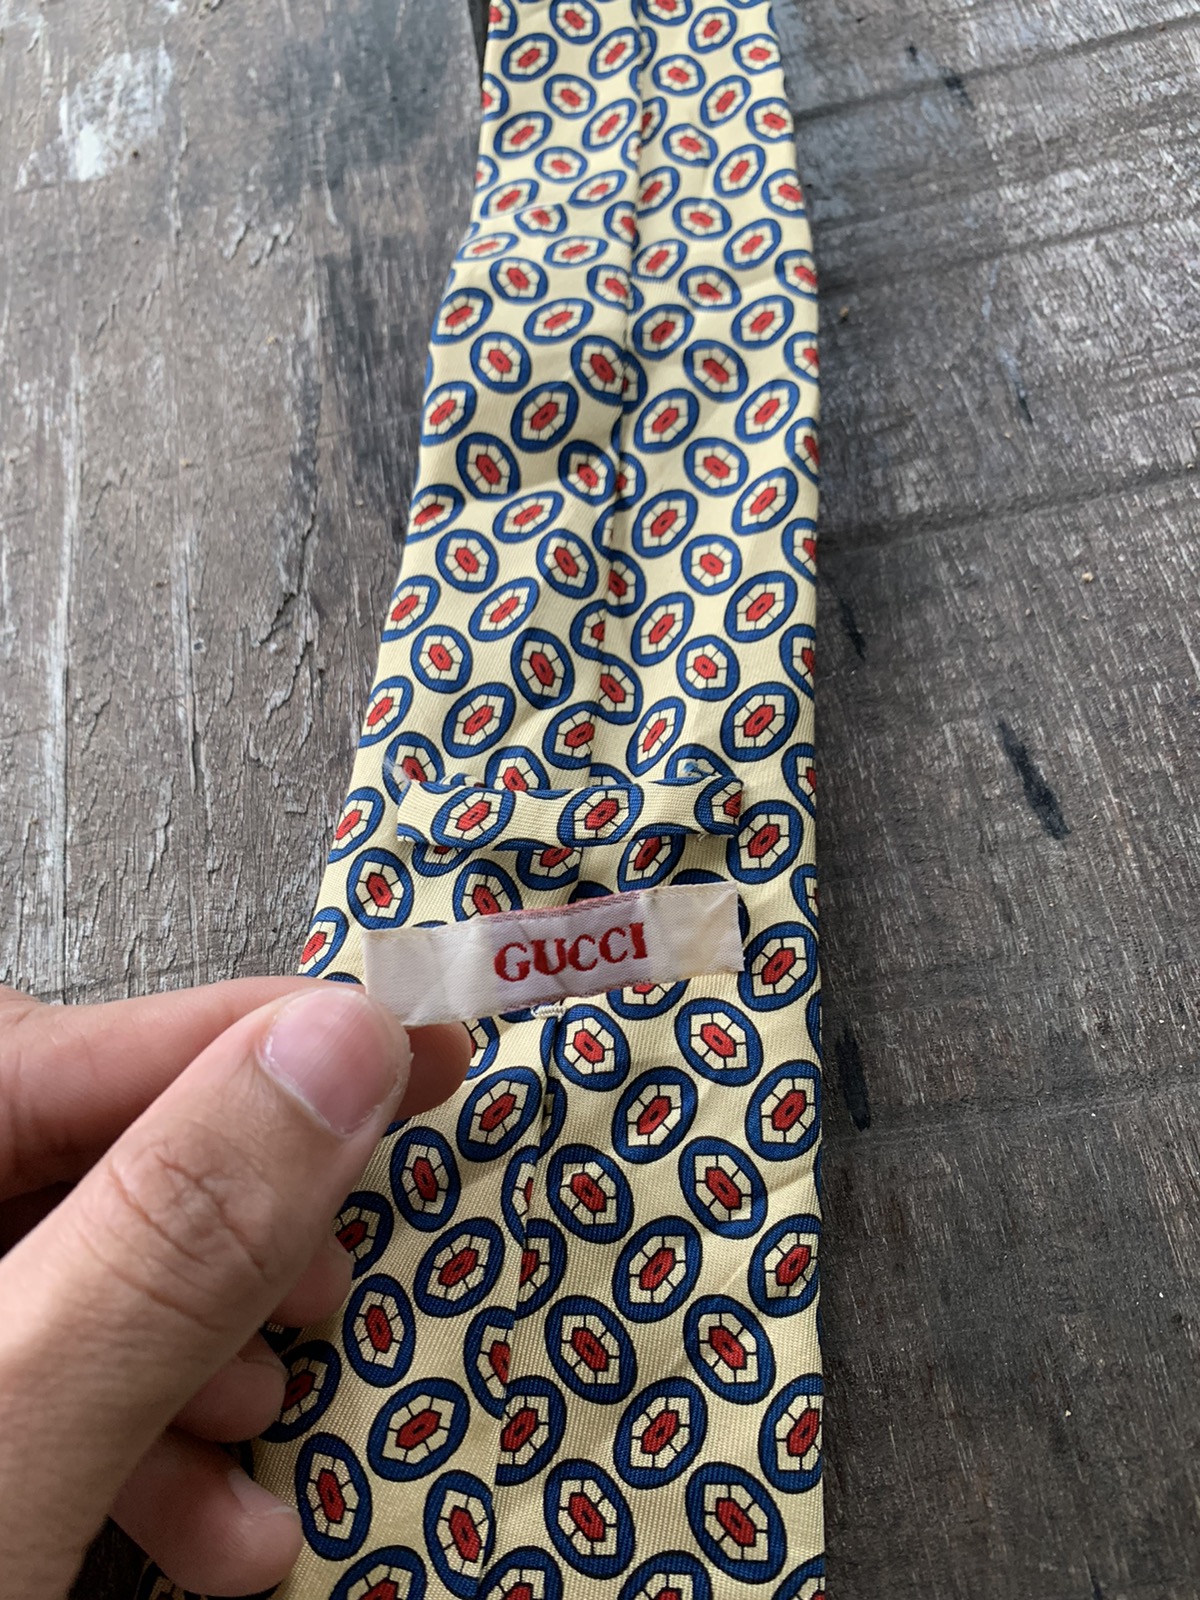 Gucci ties nice design - 6